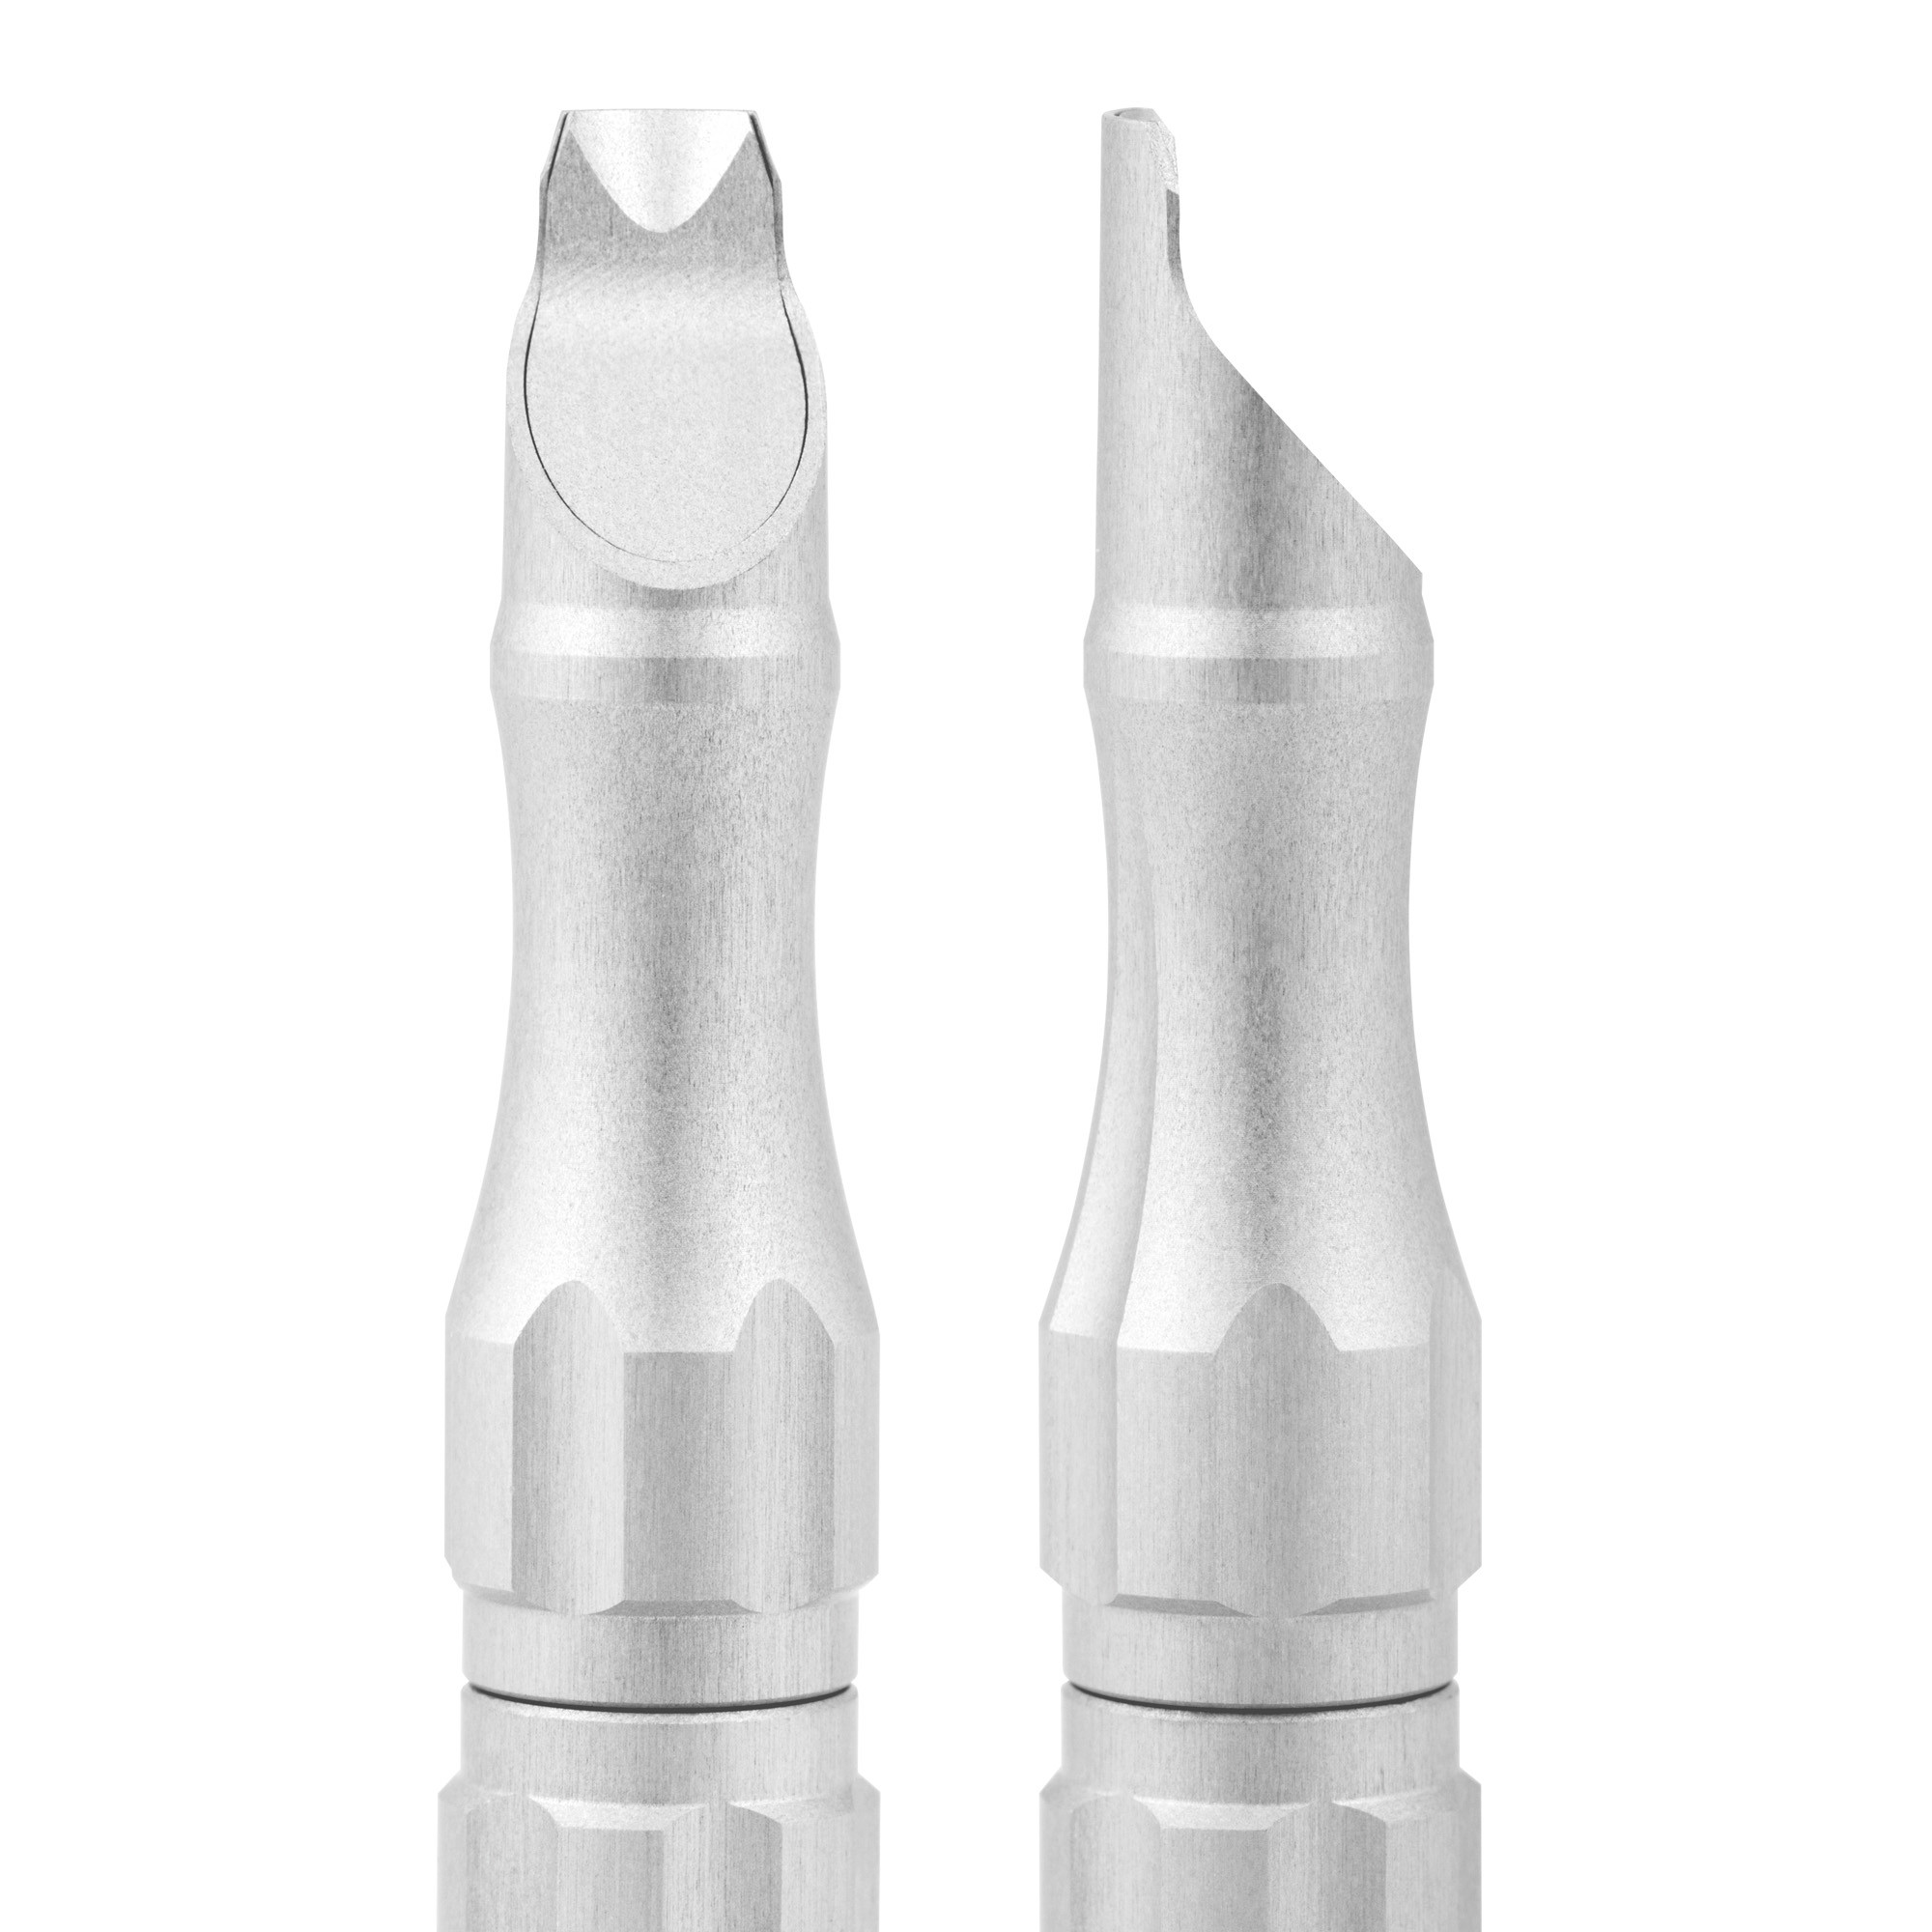 Universal aluminium handle for Tecniwork micro-blades sizes 2-2,5-3